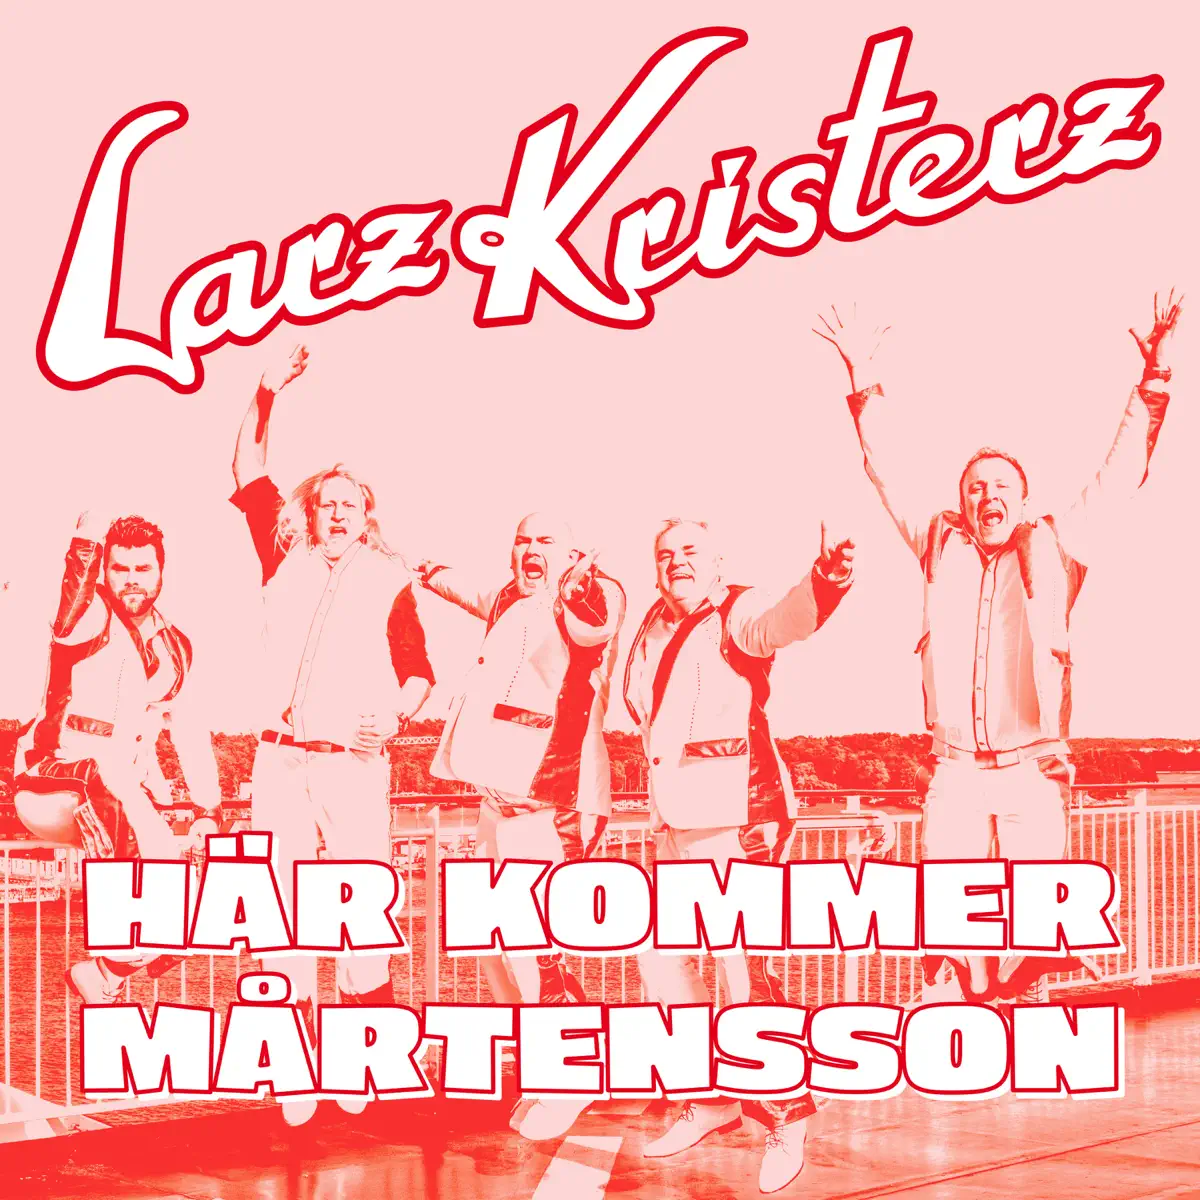 Larz-Kristerz - Music Rankings